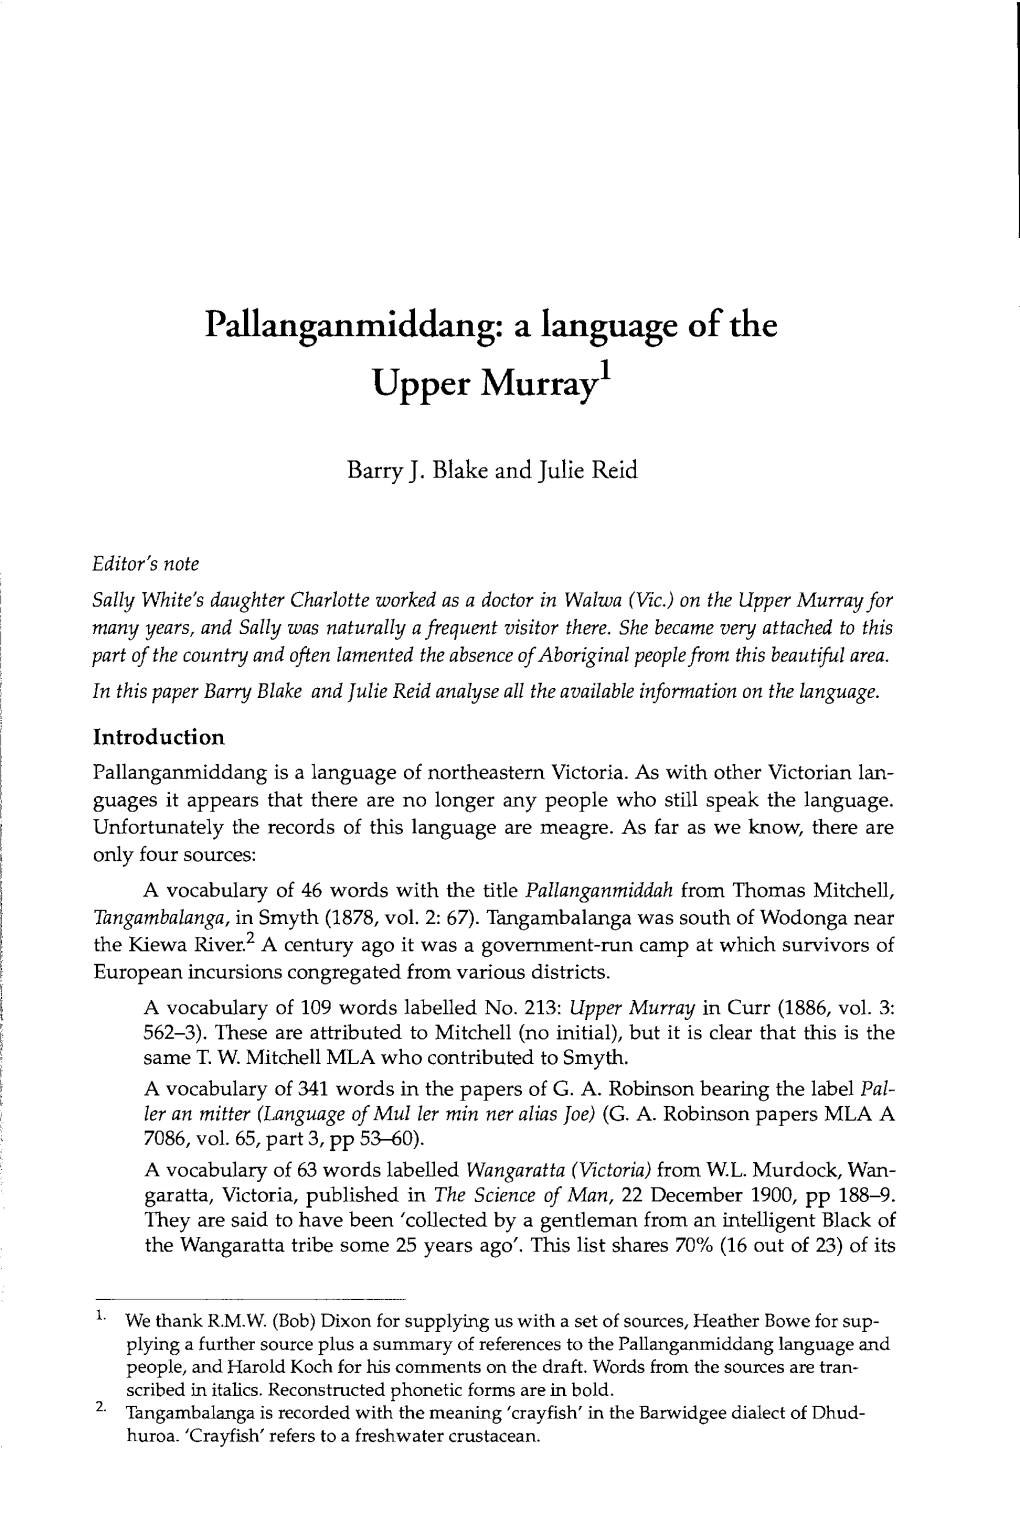 Pallanganmiddang: a Language of the Upper Murray1 2